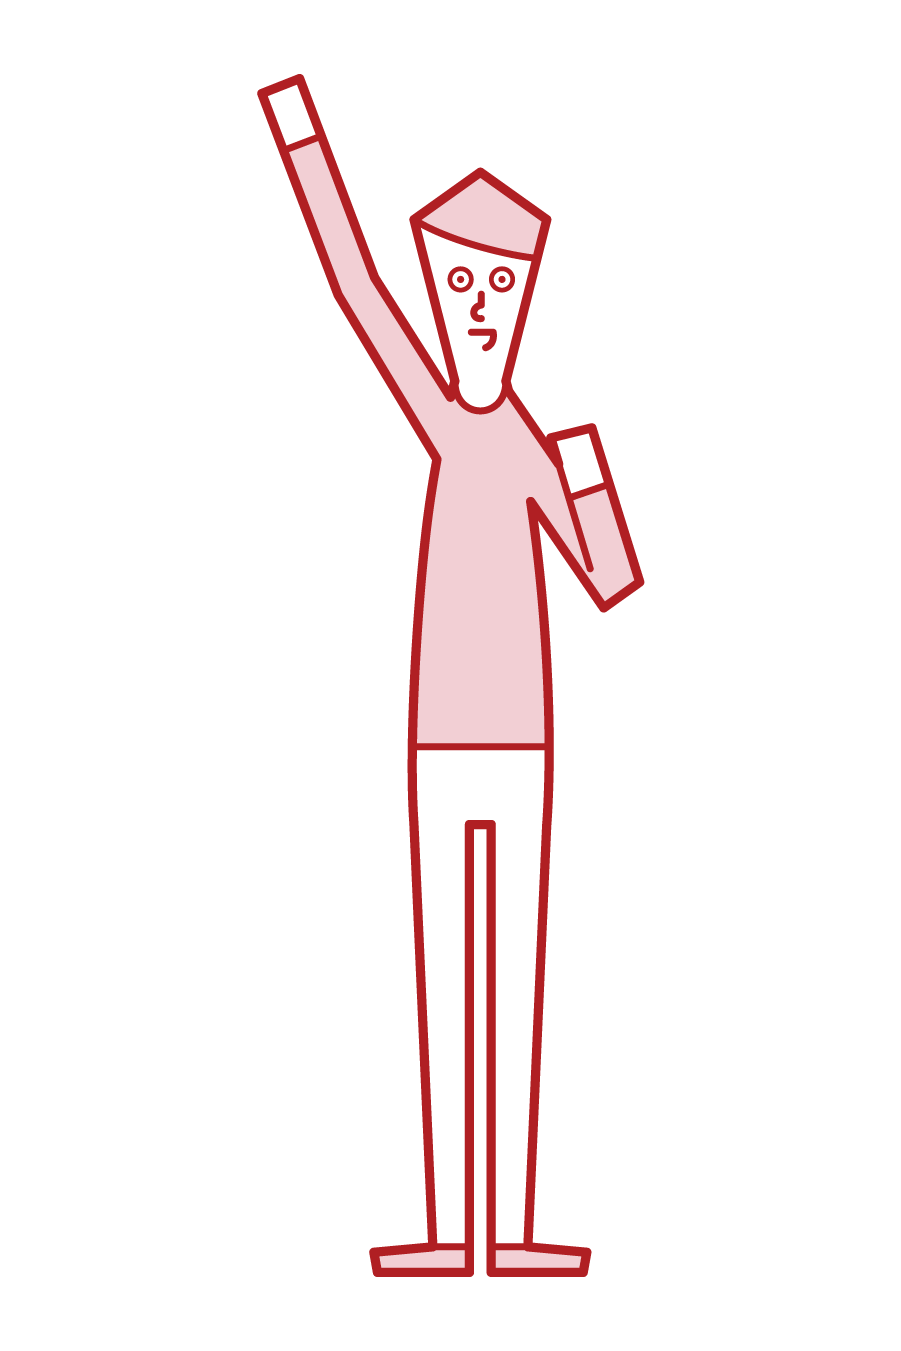 Illustration of Aei-O (man) who raises his fist high